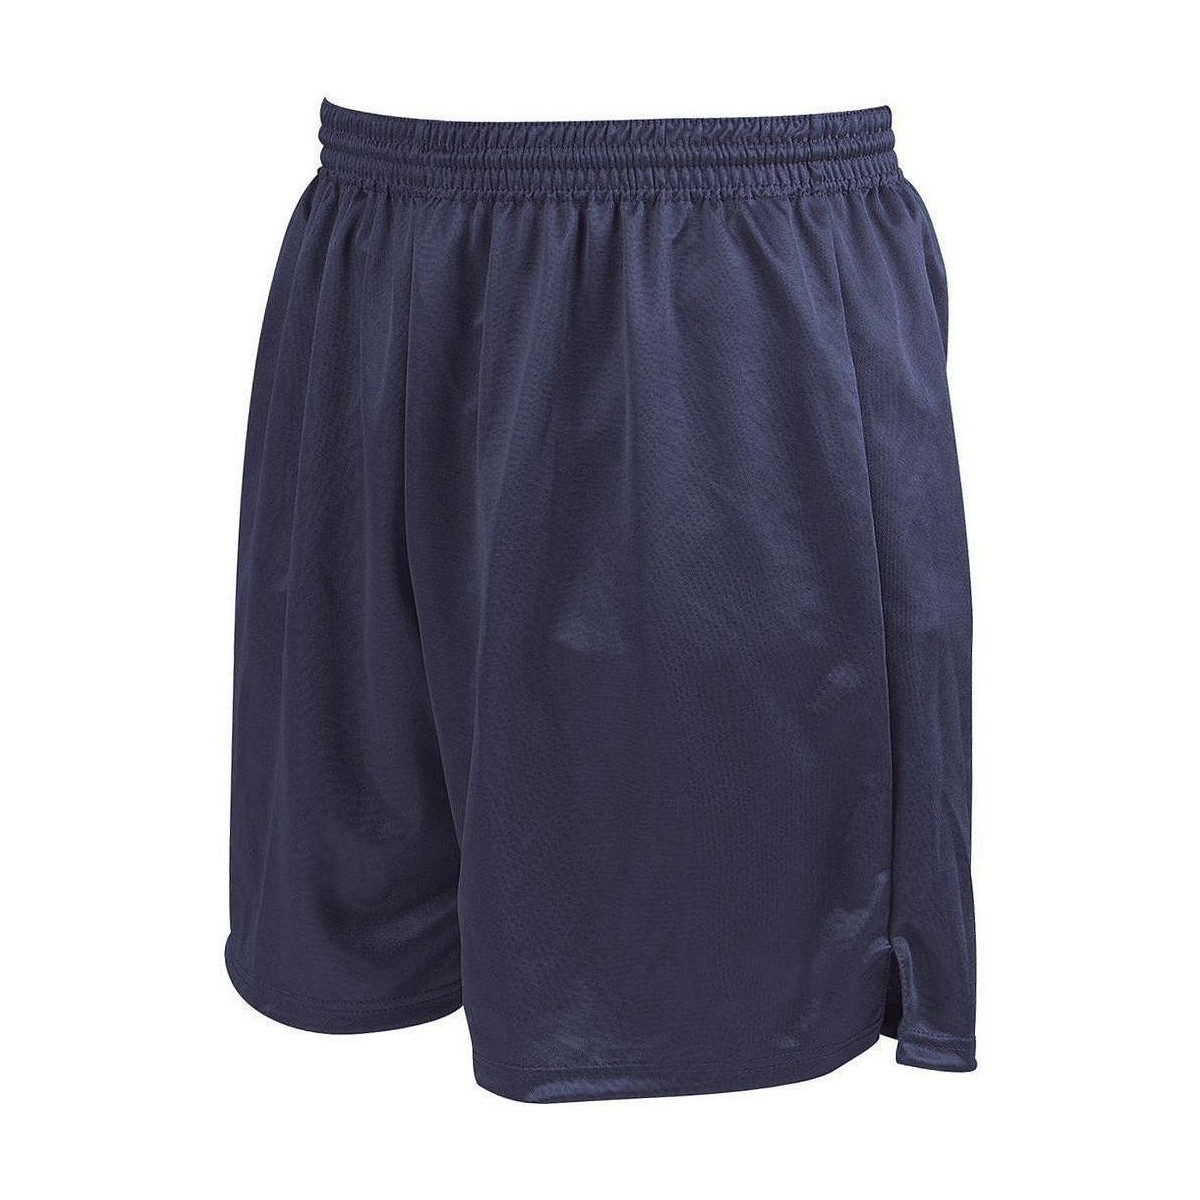 Vêtements Enfant Shorts / Bermudas Precision Attack Bleu